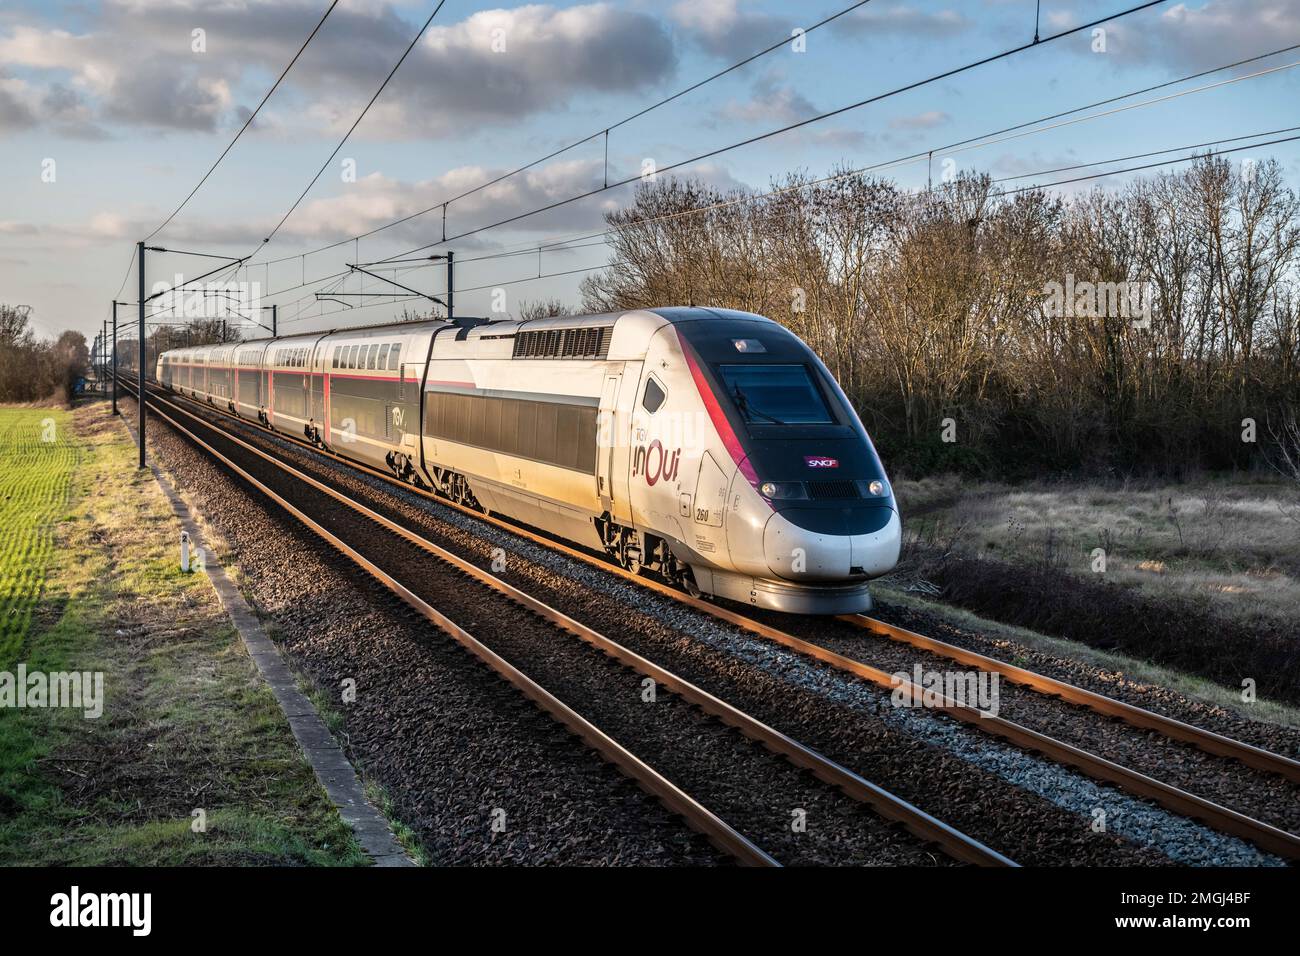 TGV Duplex, TGV Inoui high-speed train connecting La Rochelle and Paris